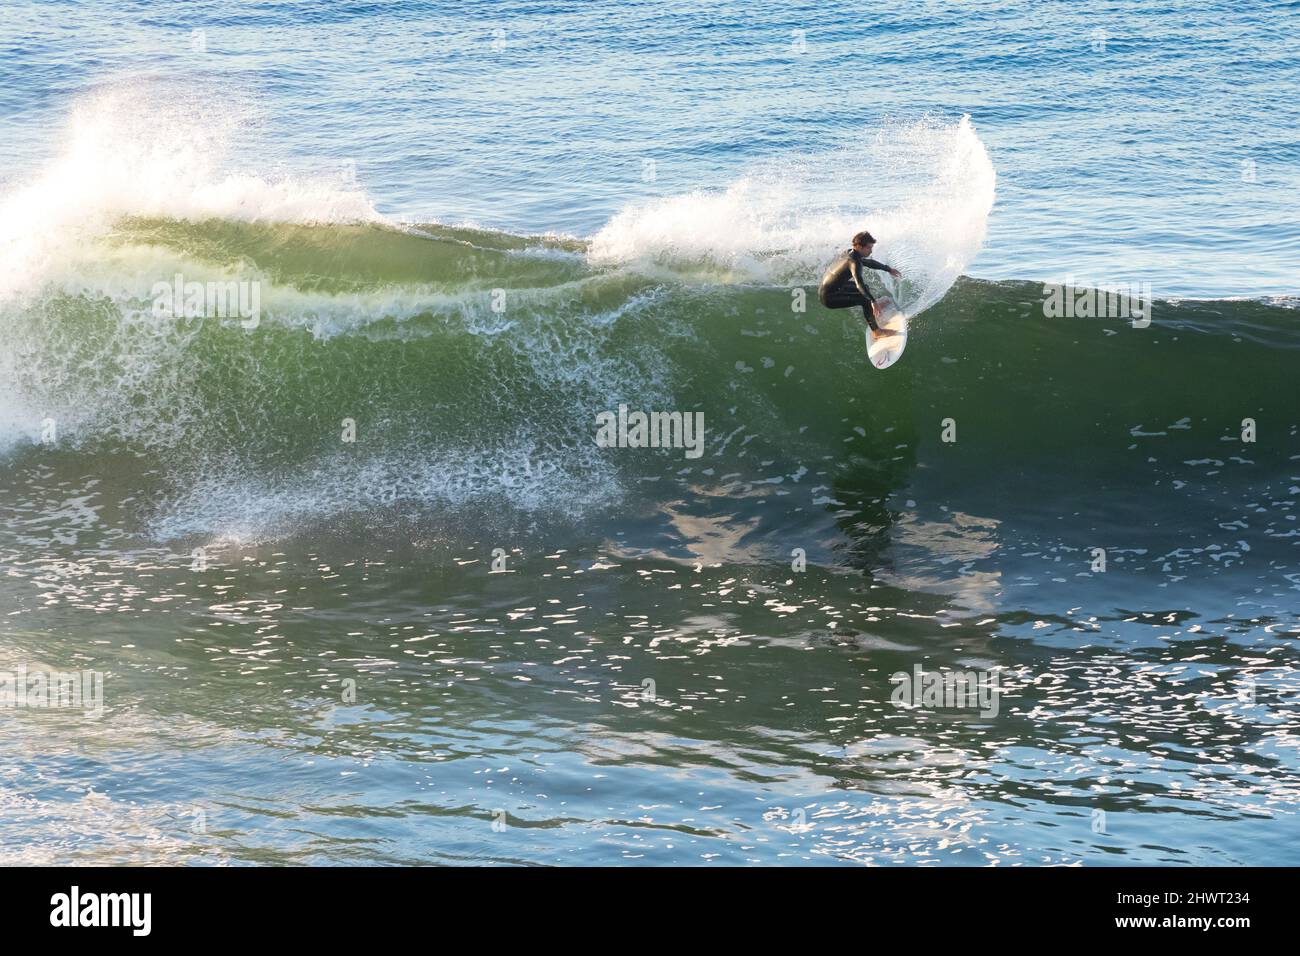 Pichilemu, Region de O'Higgins, Chile - Surfer at Punta de Lobos a surfing beach at the south of Pichilemu. Stock Photo